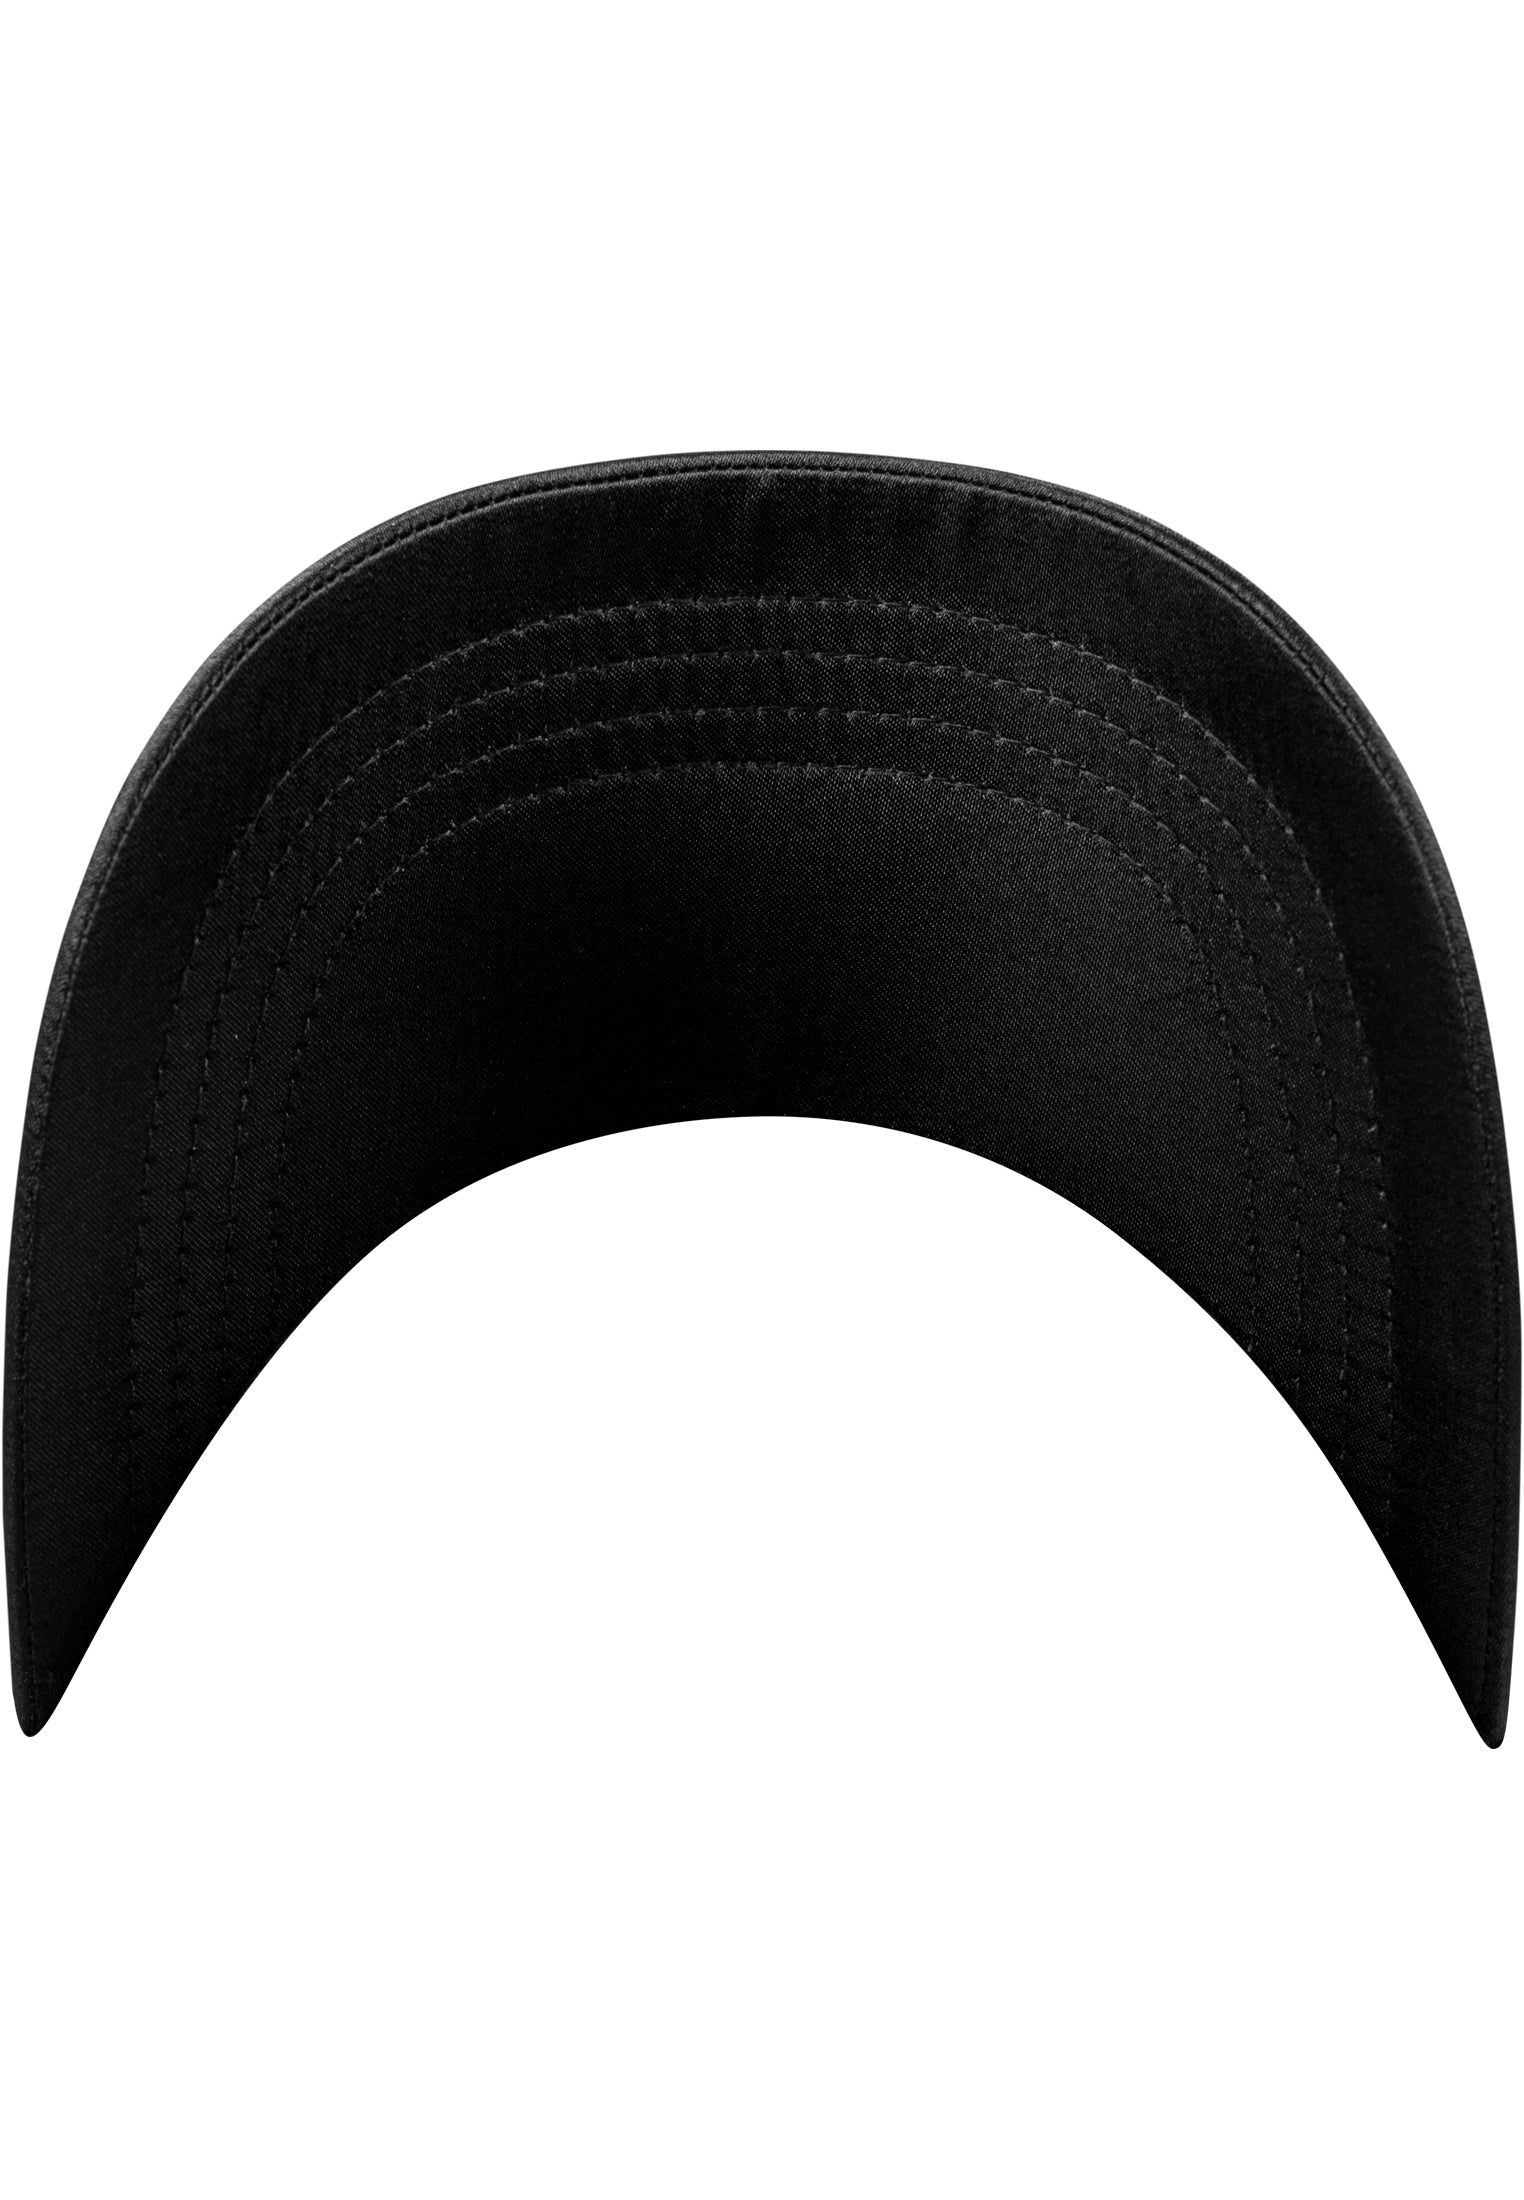 Low Profile Satin Cap - Black - Headz Up 